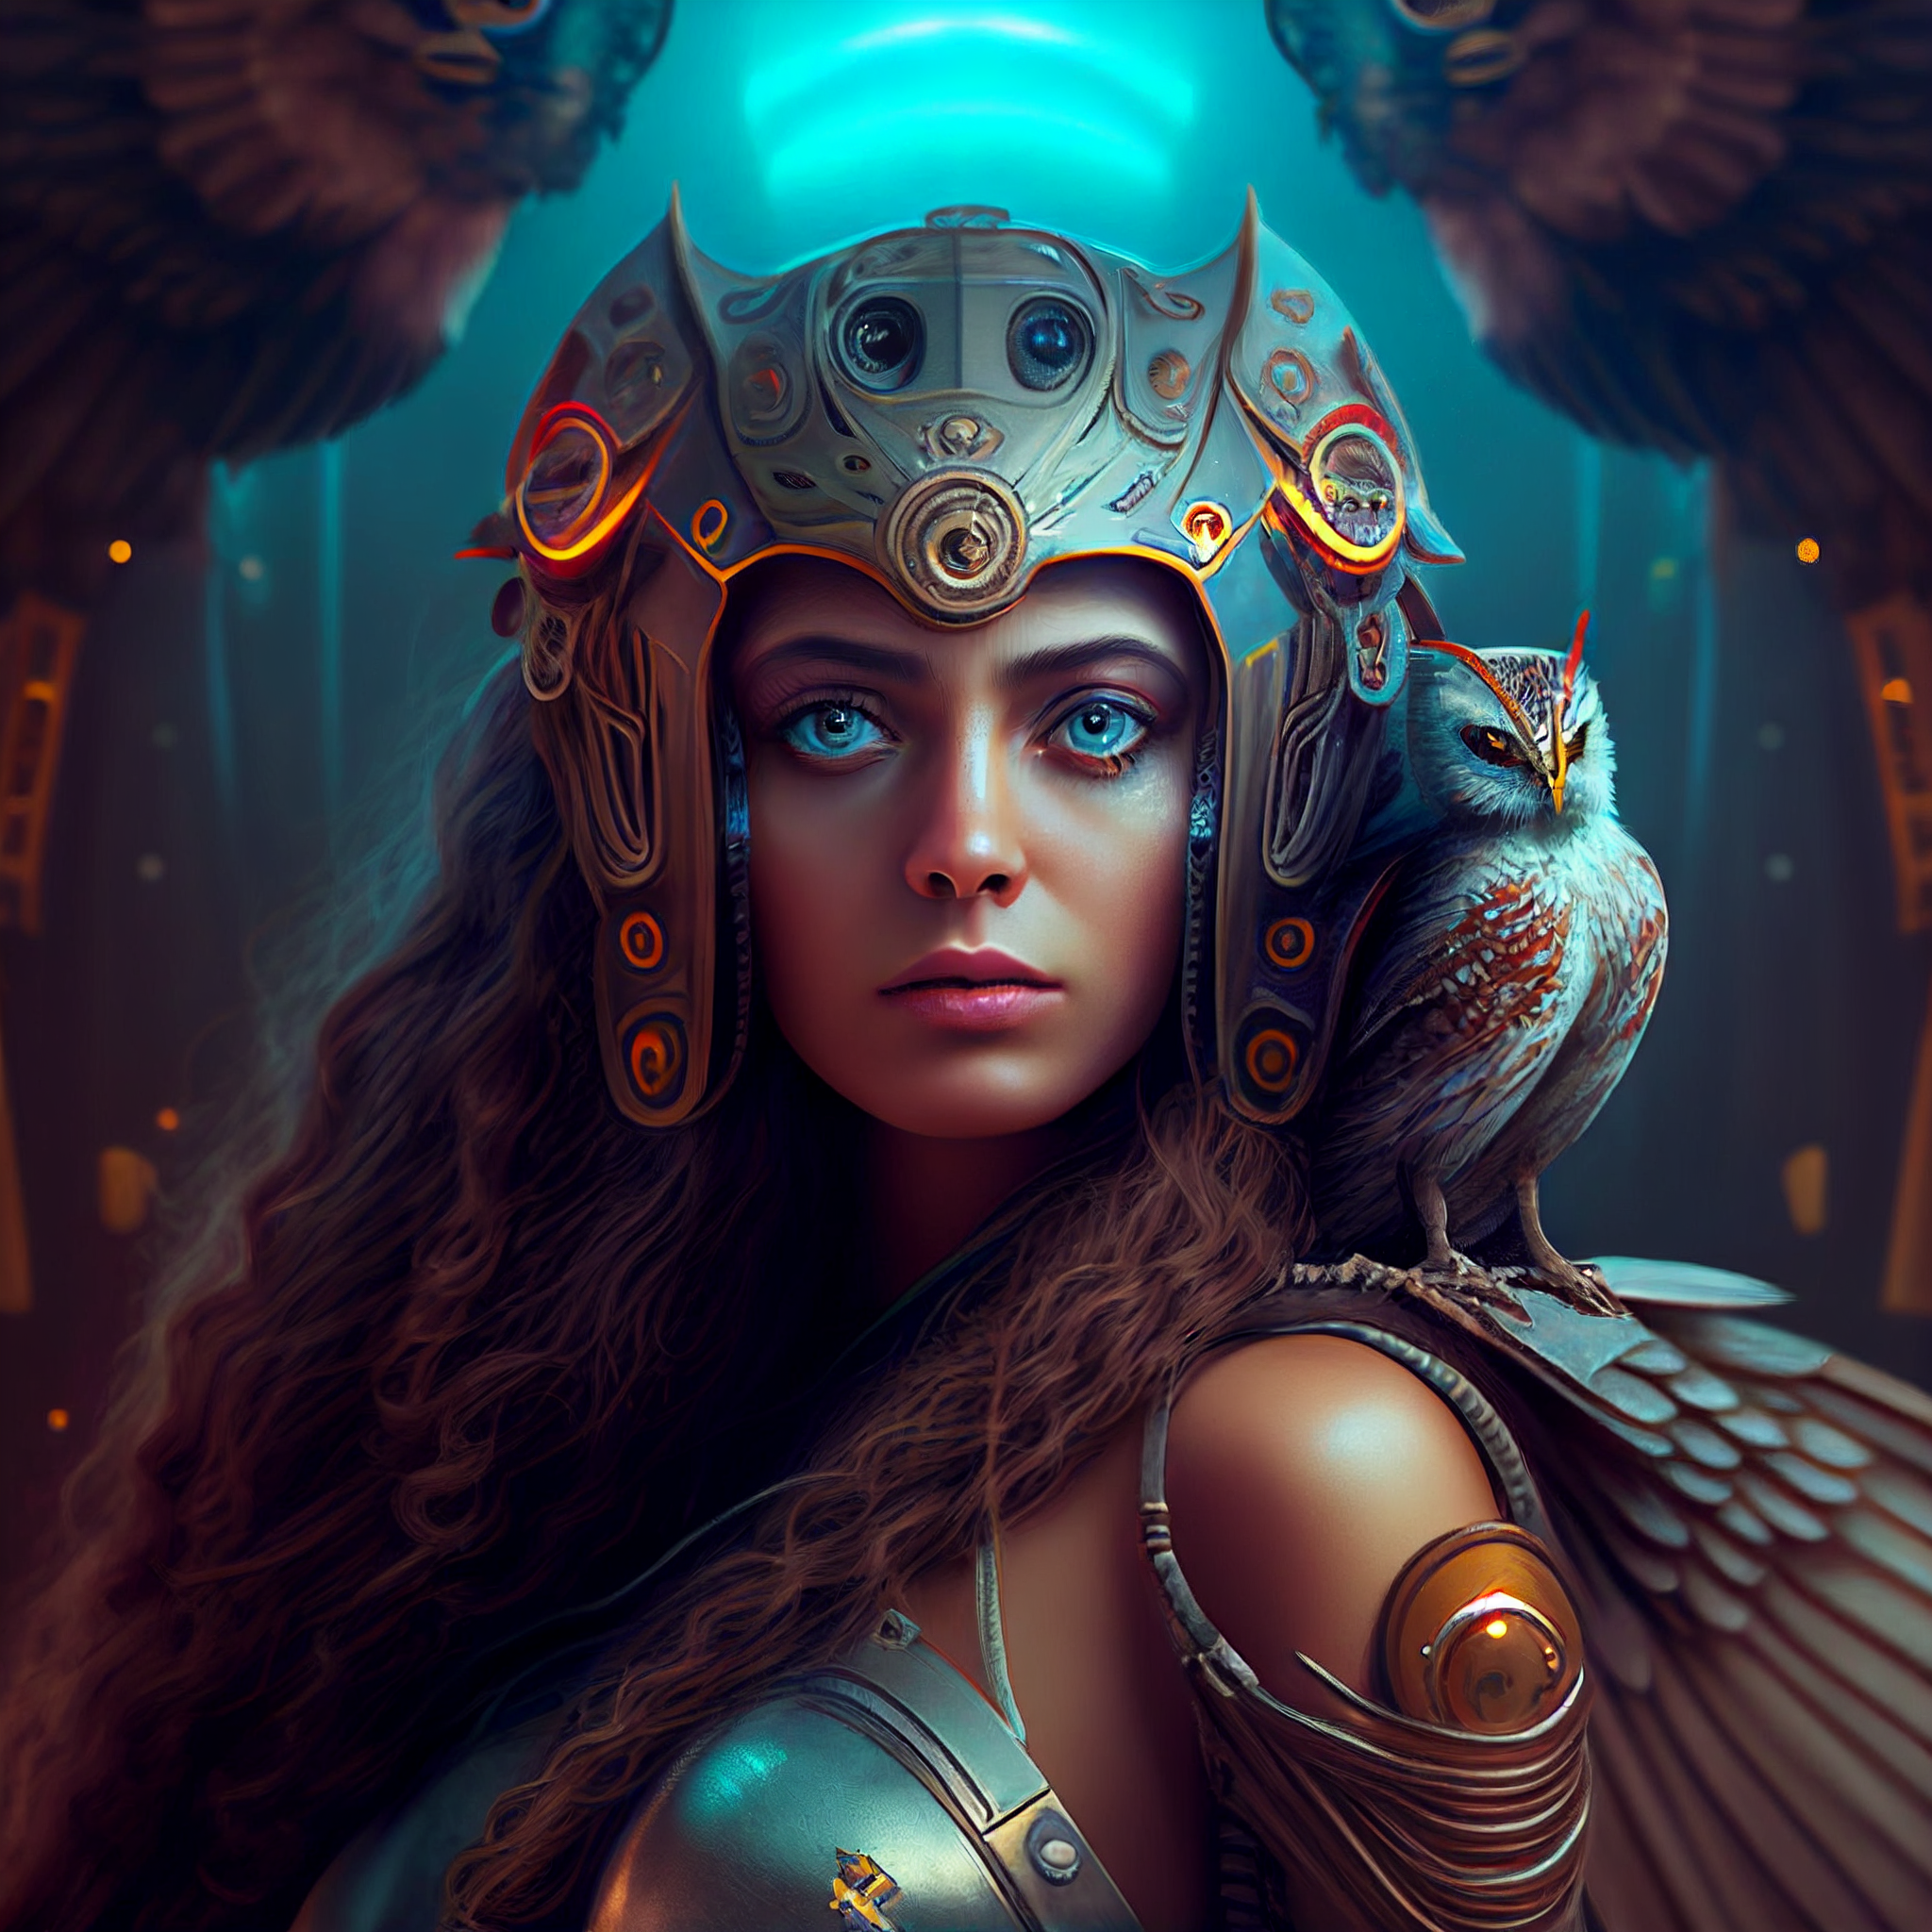 Athena, goddess of wisdom